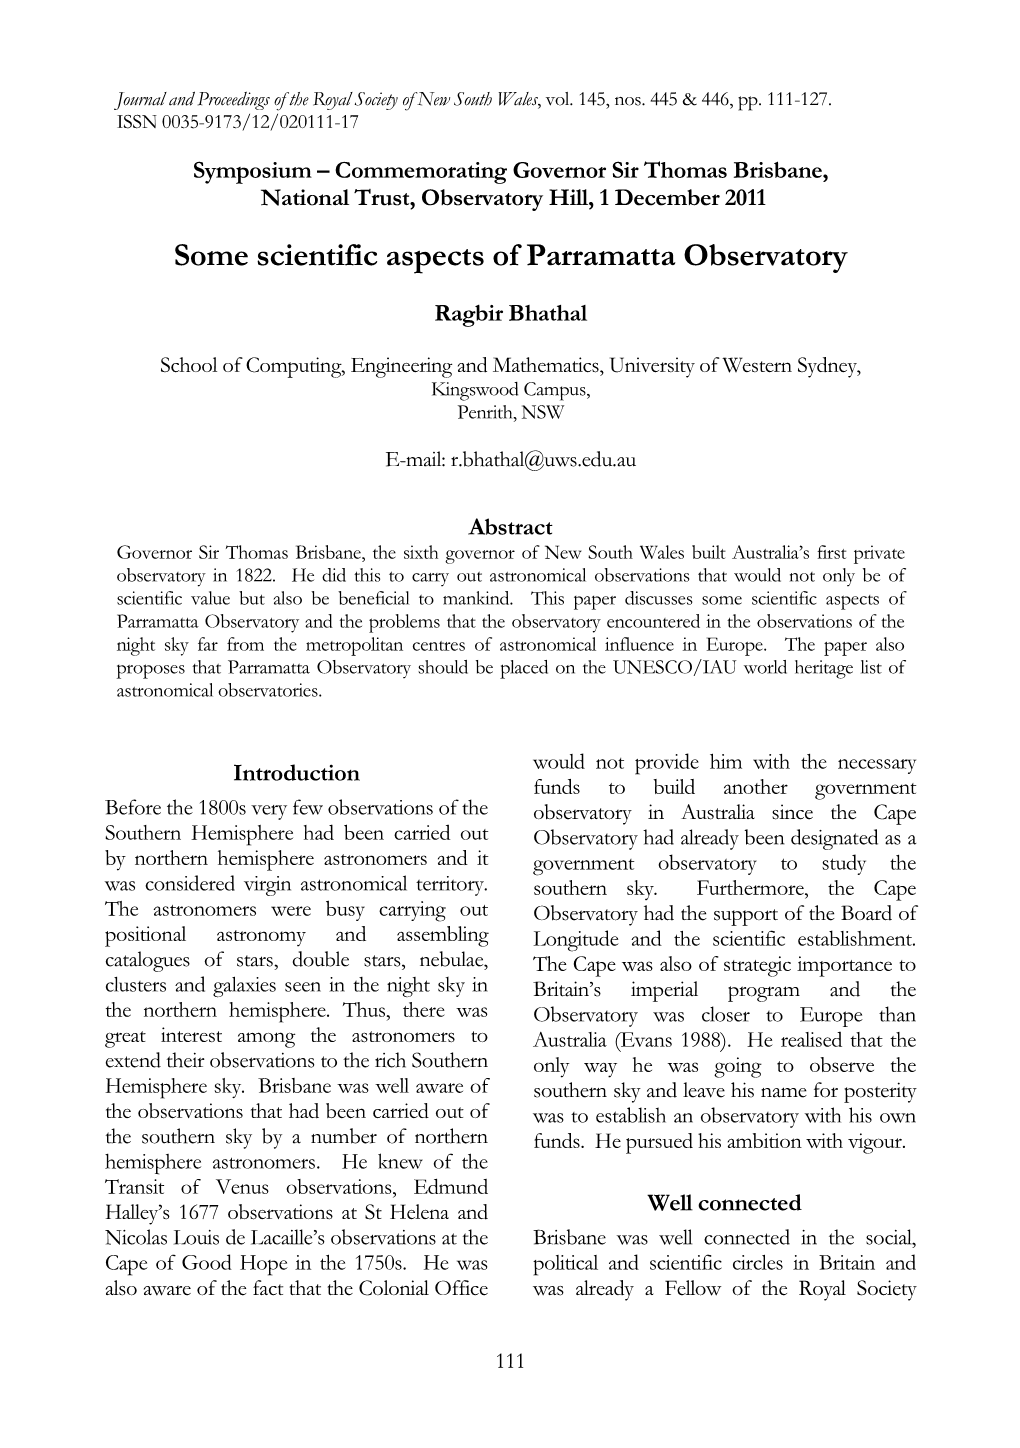 Some Scientific Aspects of Parramatta Observatory